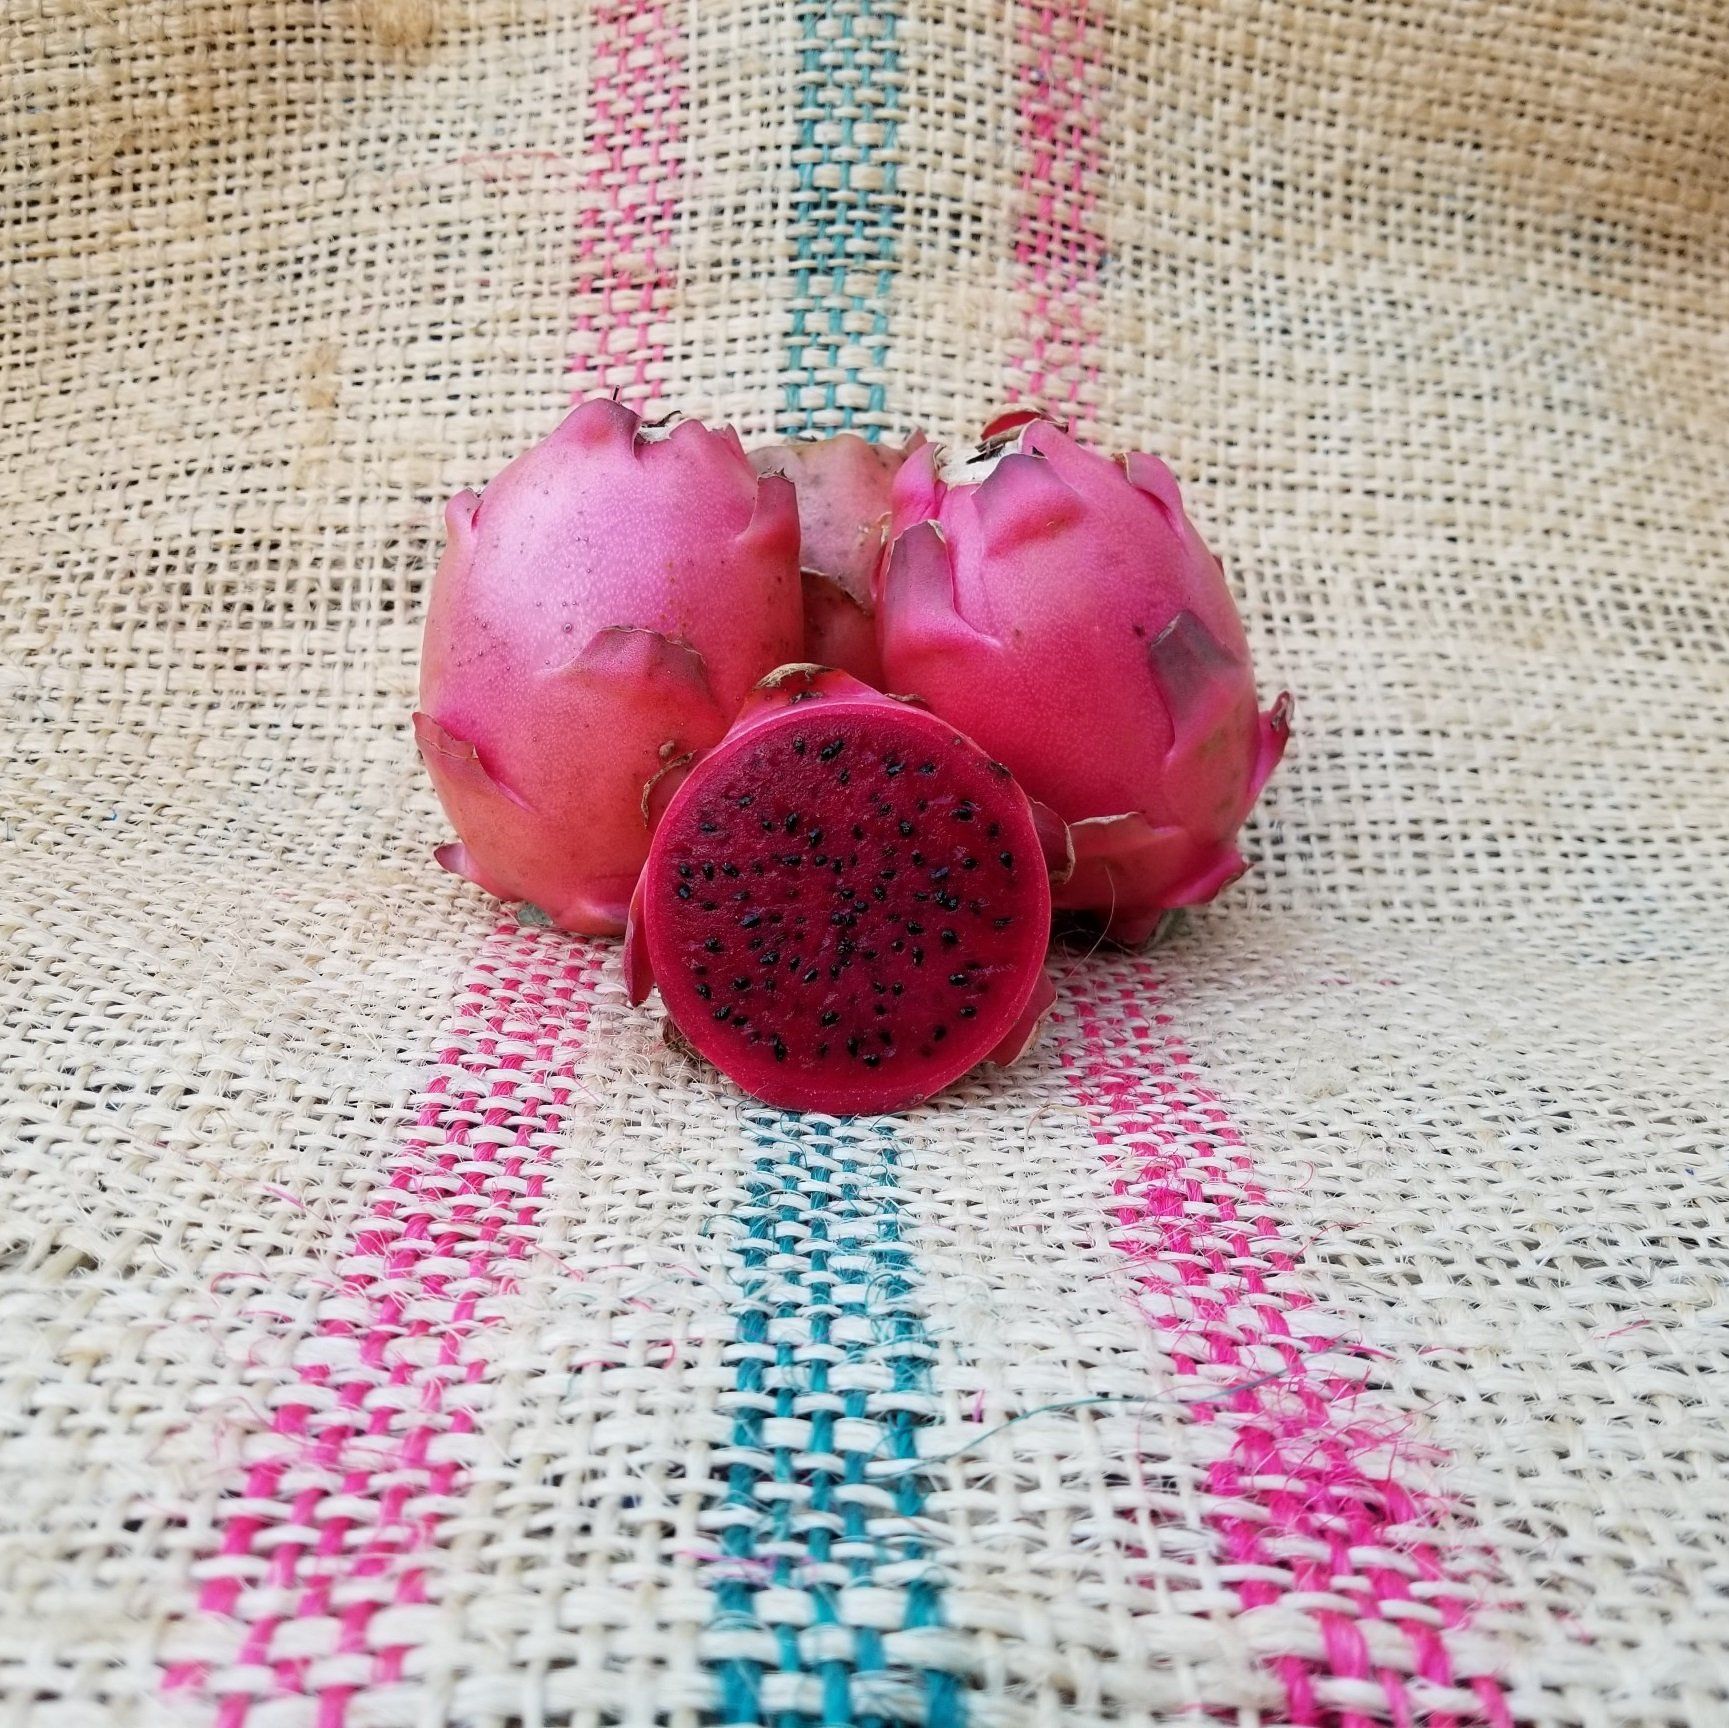 Valdivia Roja dragon fruit cut in half